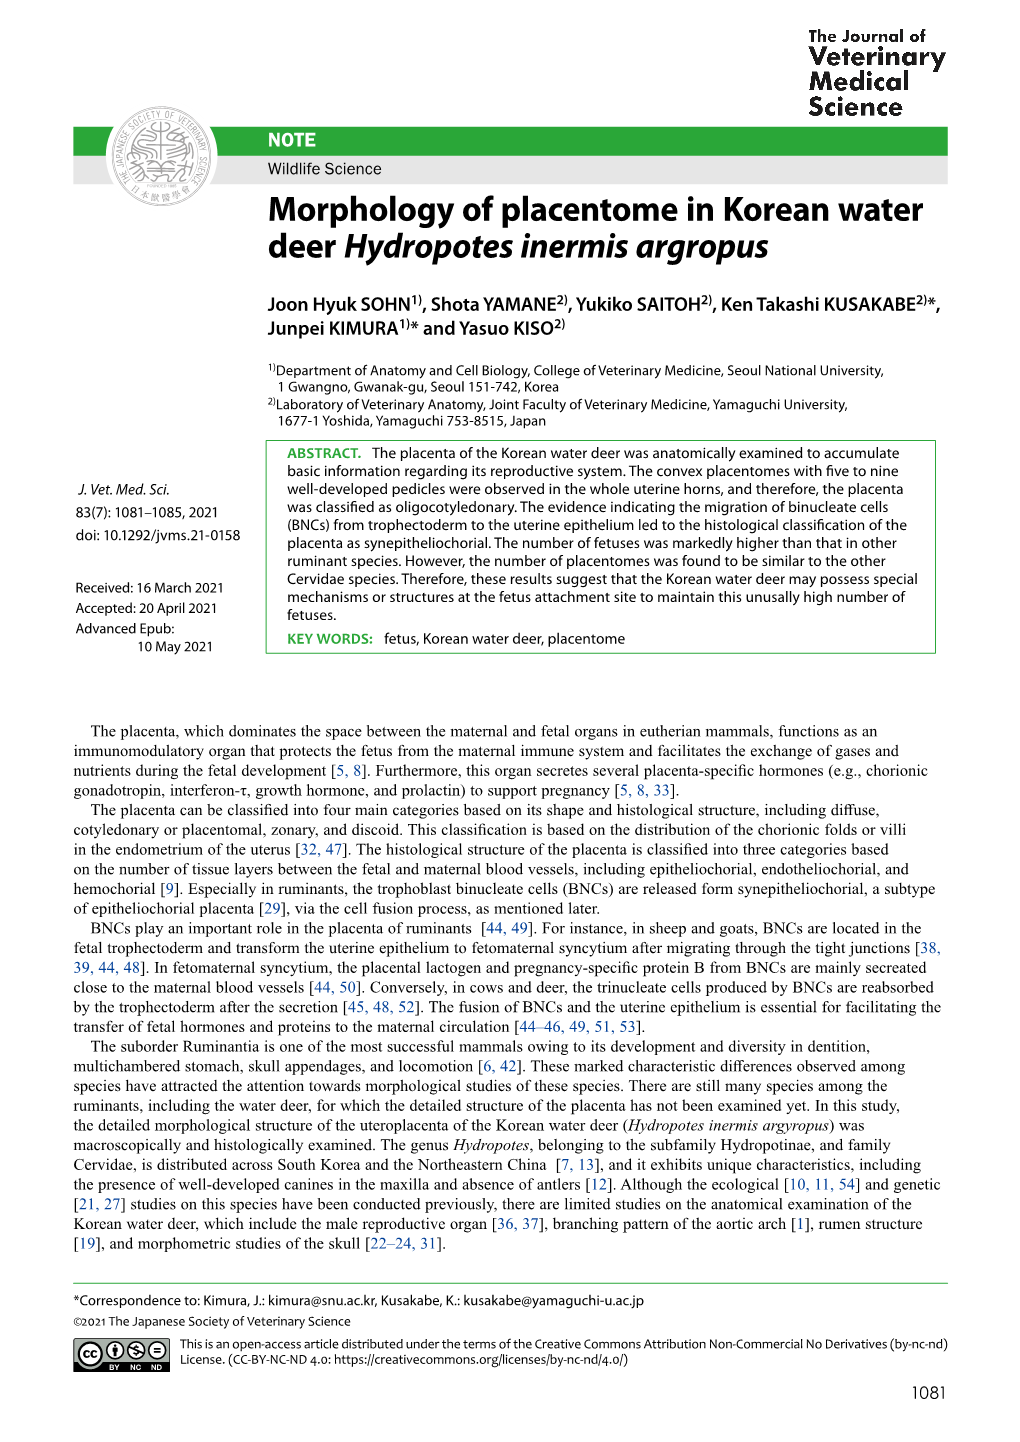 Morphology of Placentome in Korean Water Deer Hydropotes Inermis Argropus